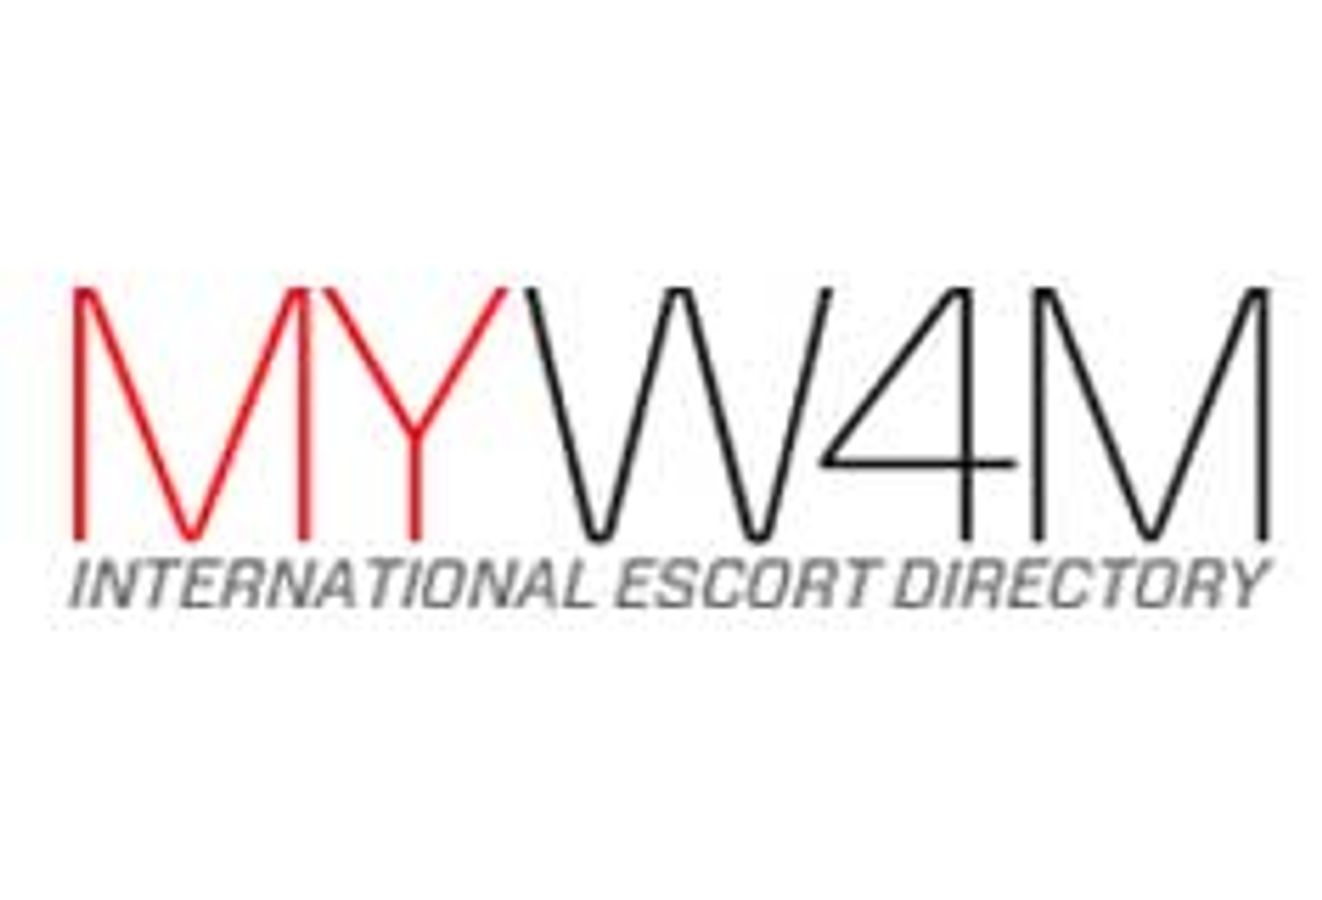 MYW4M.com